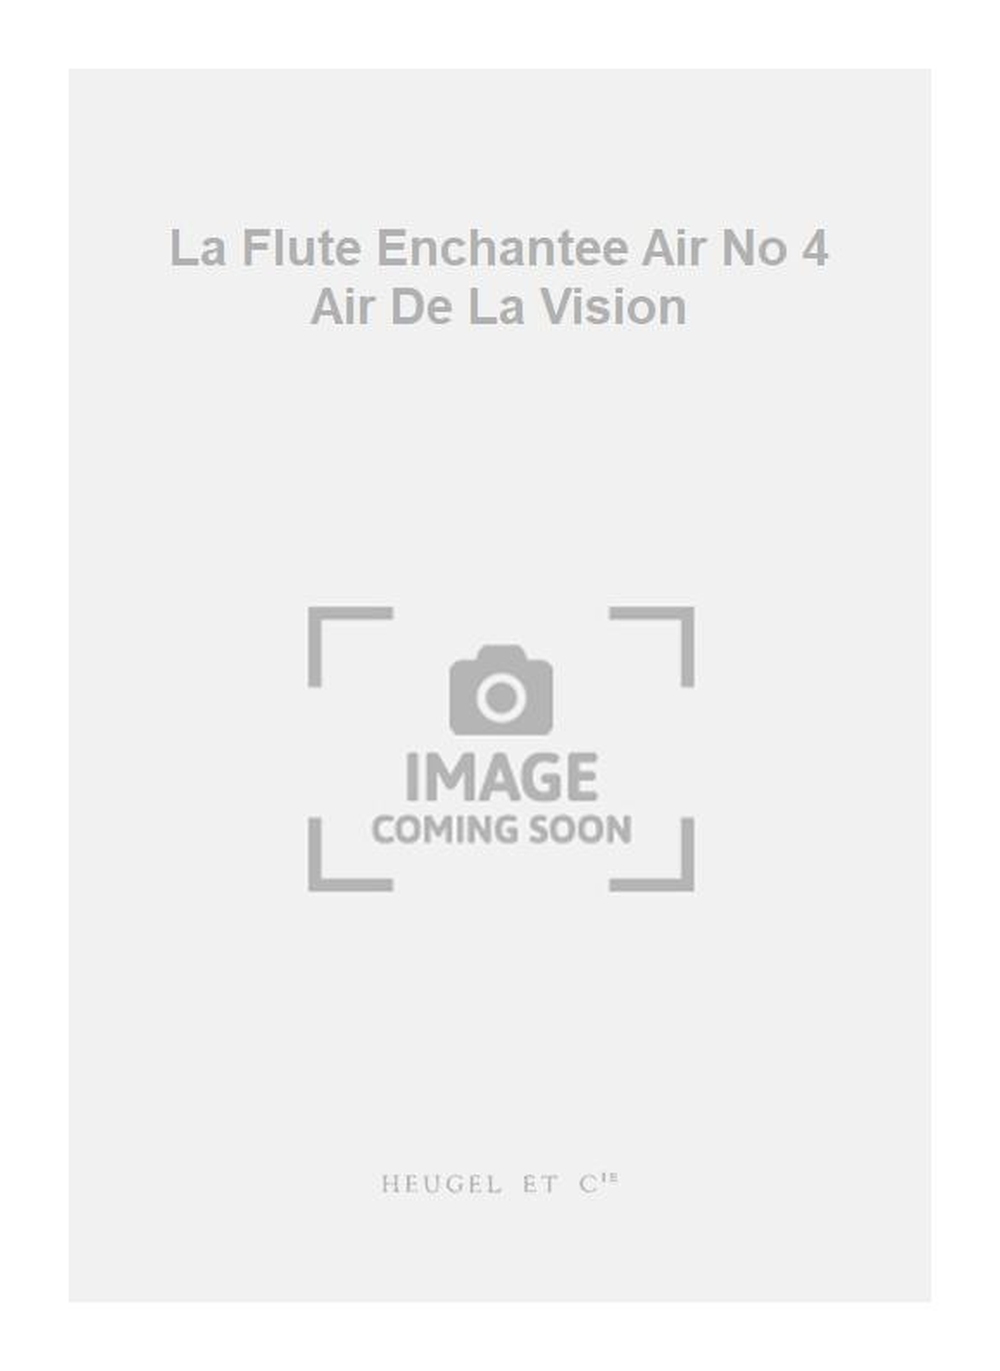 Wolfgang Amadeus Mozart: La Flute Enchantee Air No 4 Air De La Vision